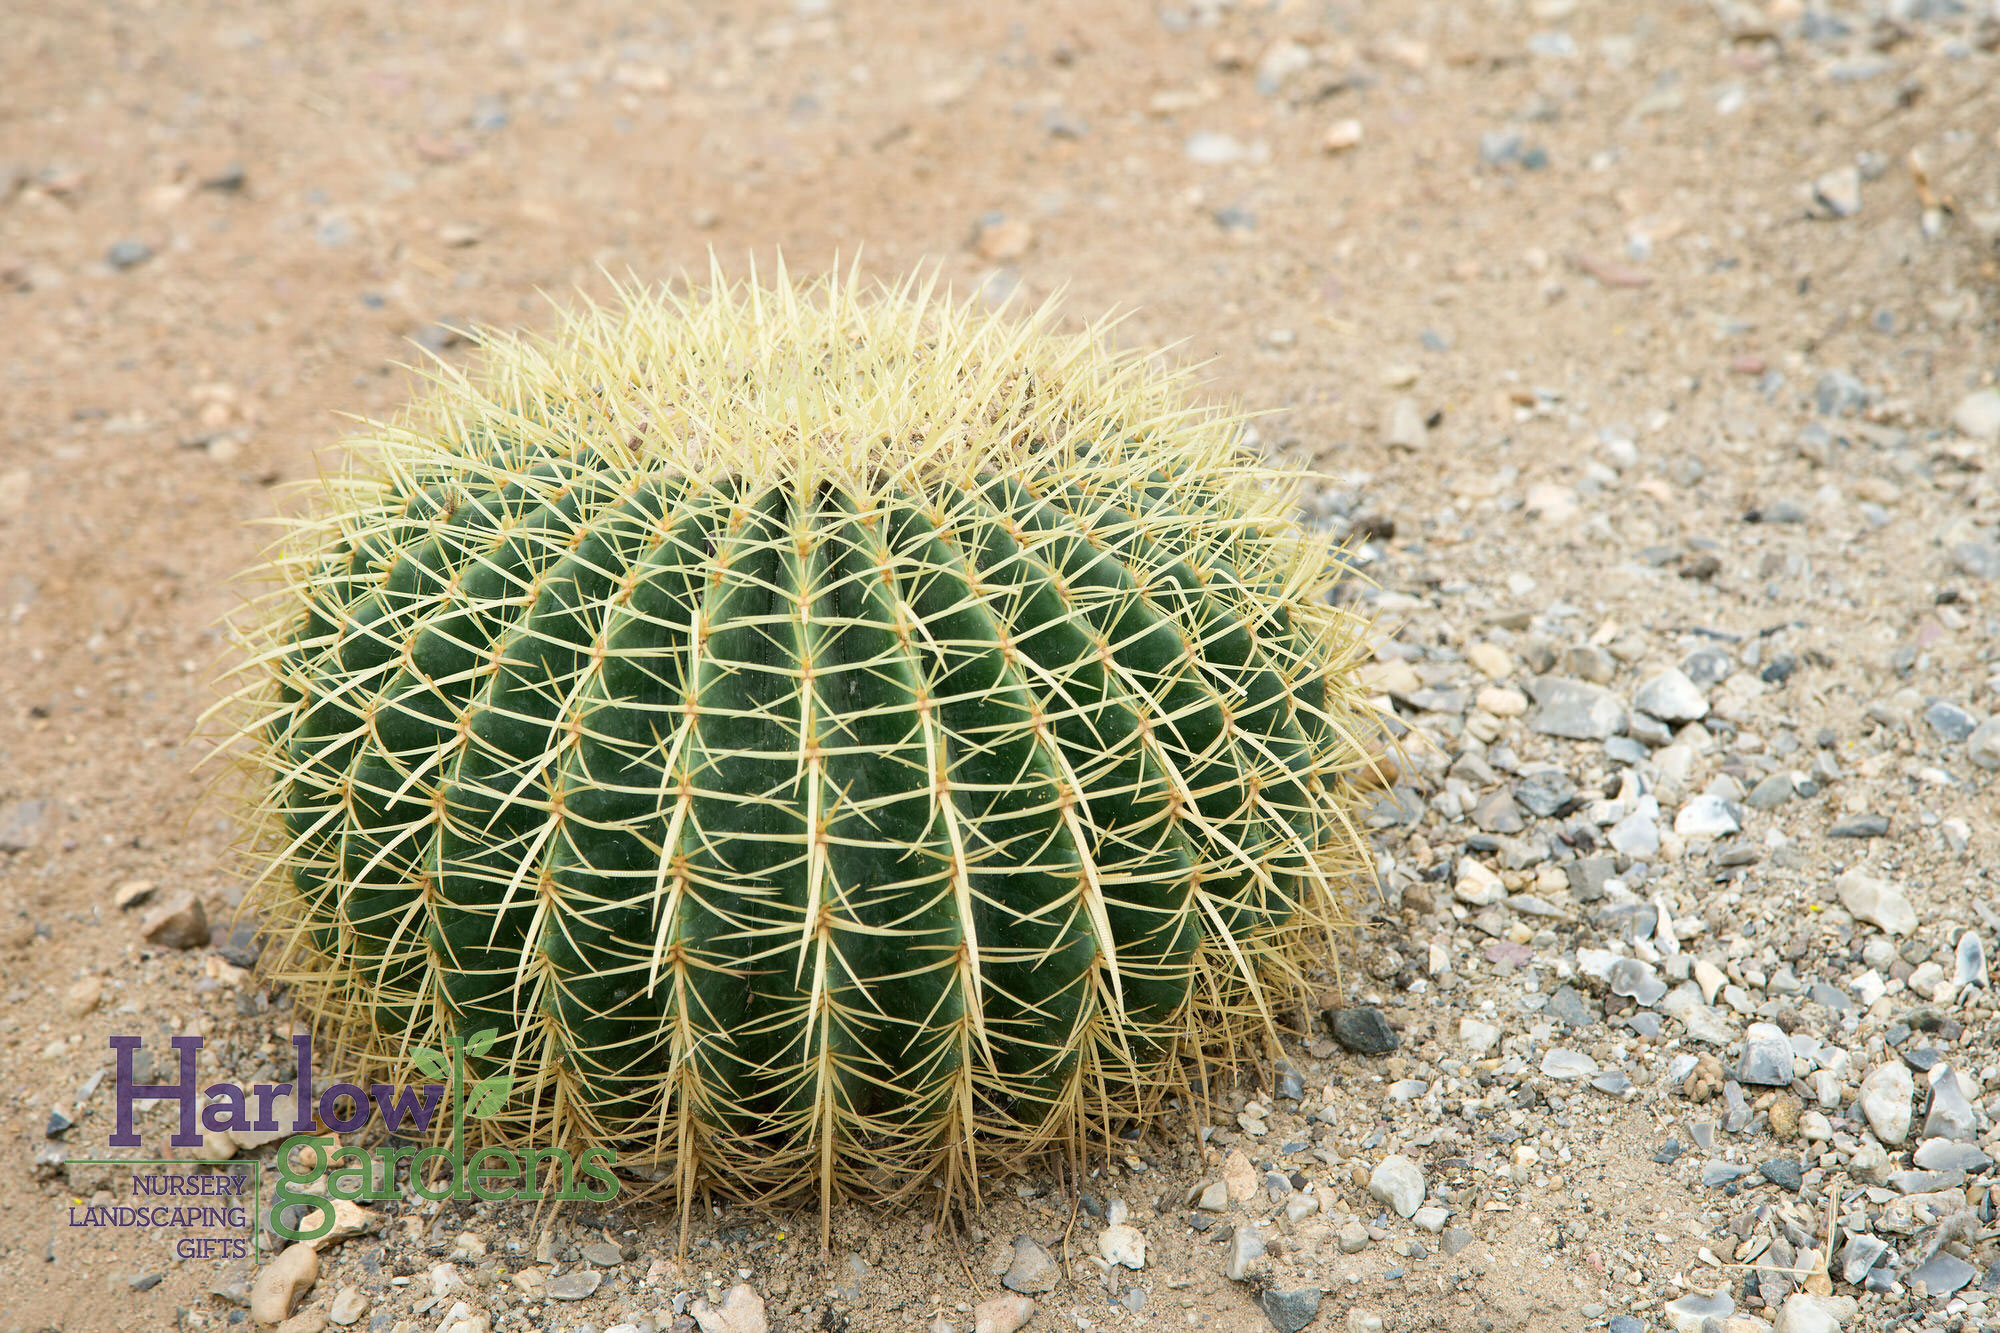 Barrel Cactus for sale at Harlow Gardens Tucson.